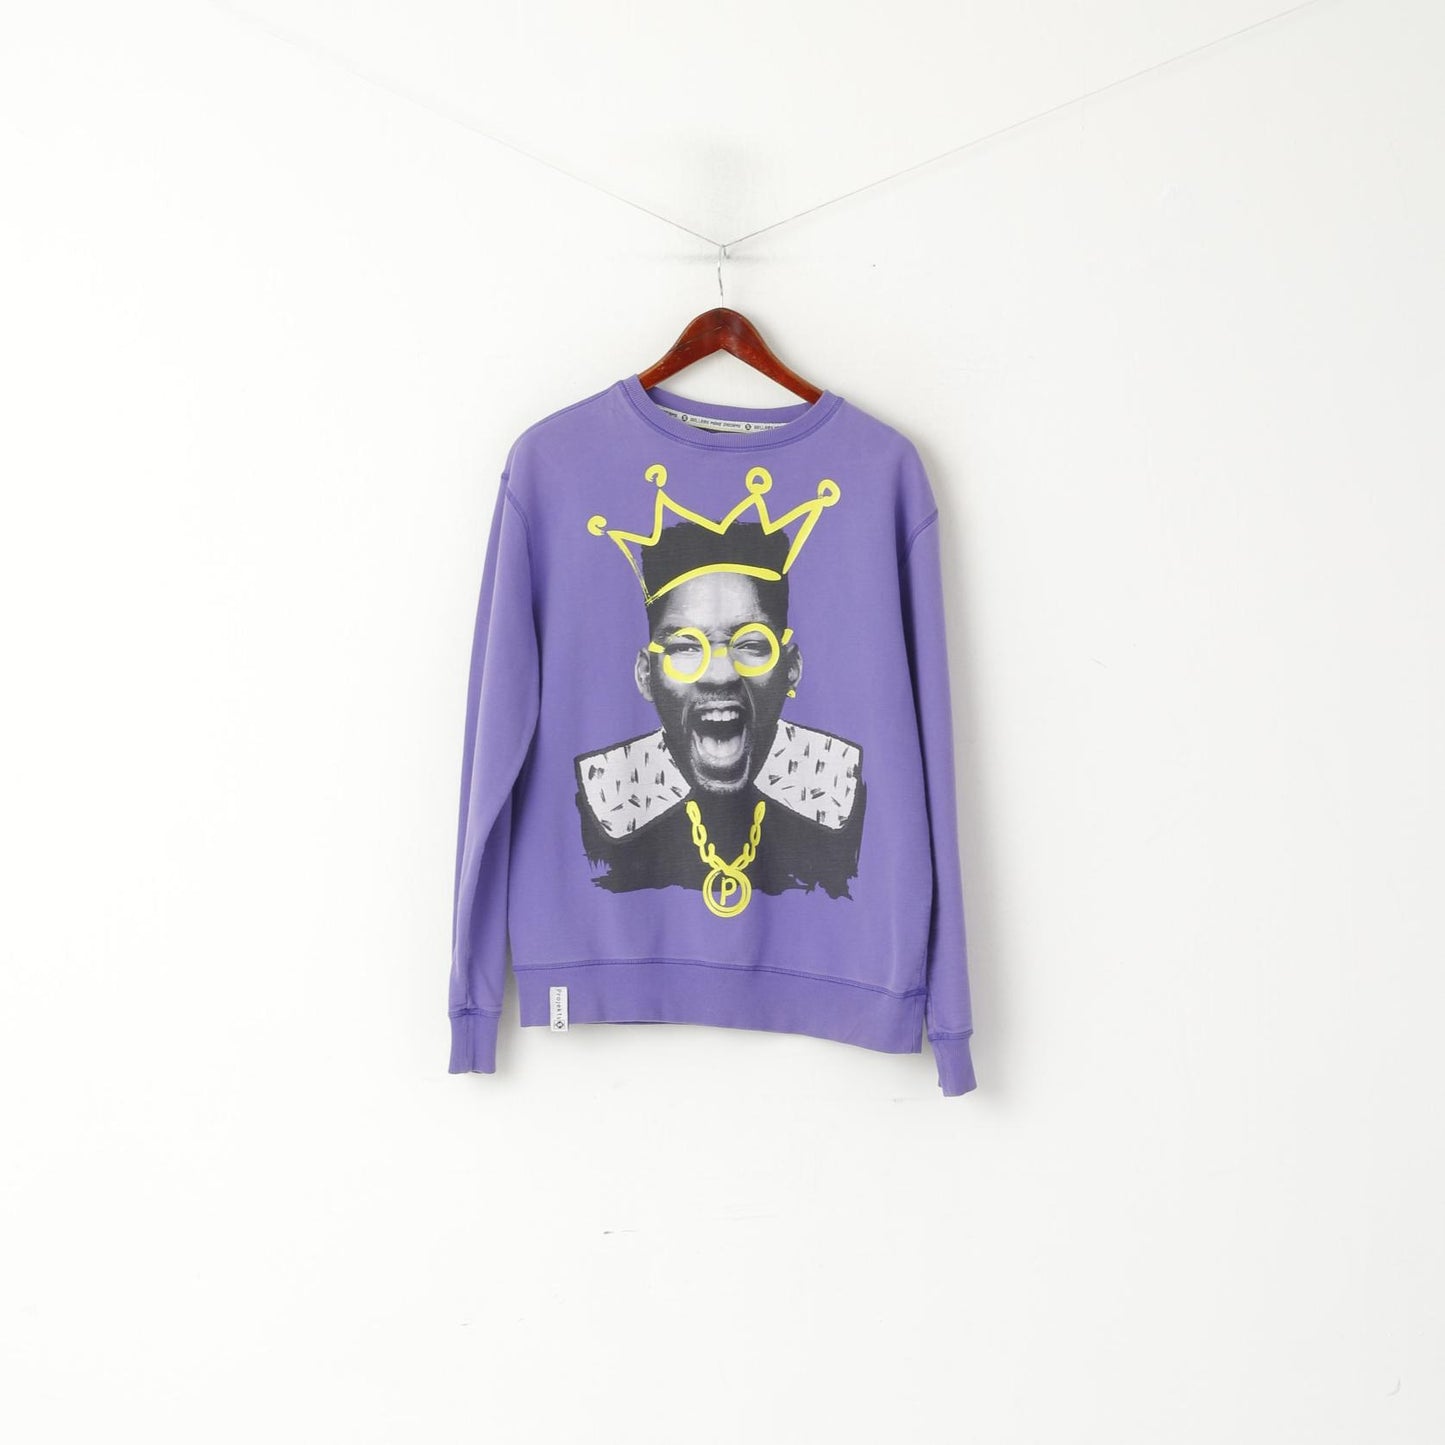 Projekts $ Men L Sweatshirt Violet Coton Dollars Make Dreams NYC Blouse Top